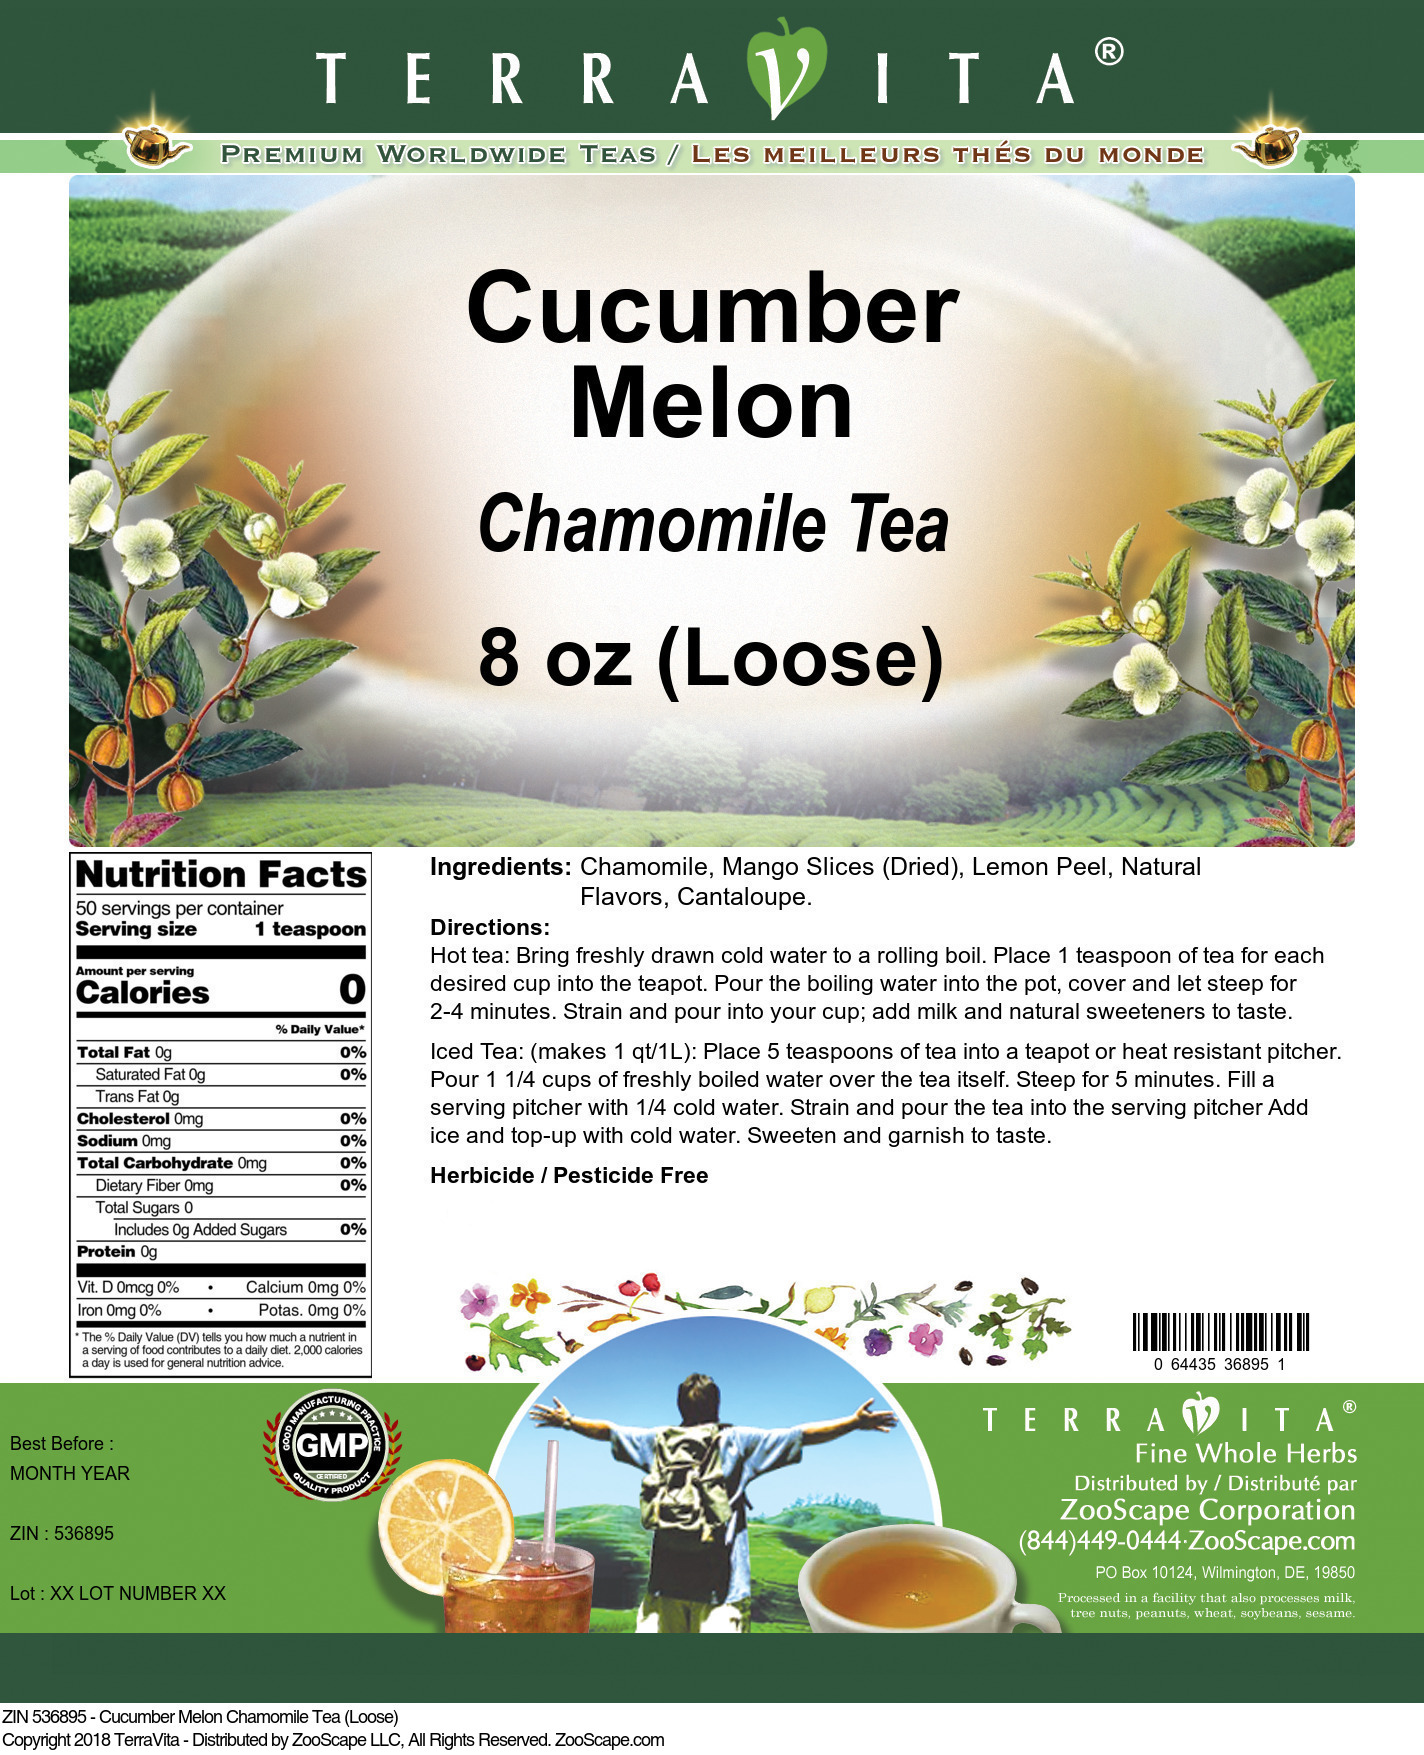 Cucumber Melon Chamomile Tea (Loose) - Label